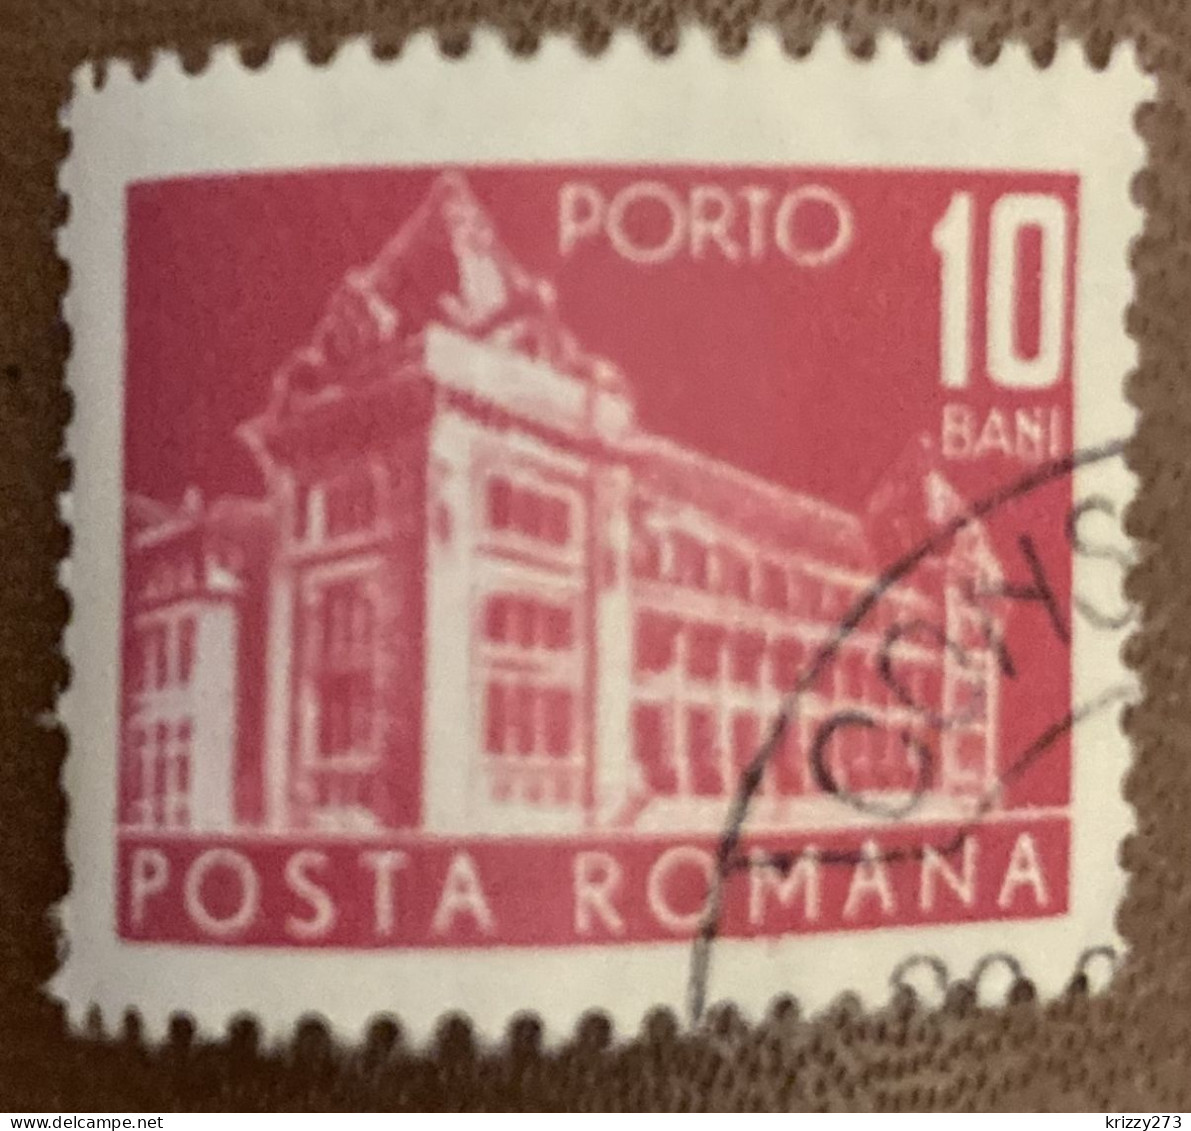 Romania 1967 Postage Due 10B - Used - Postage Due